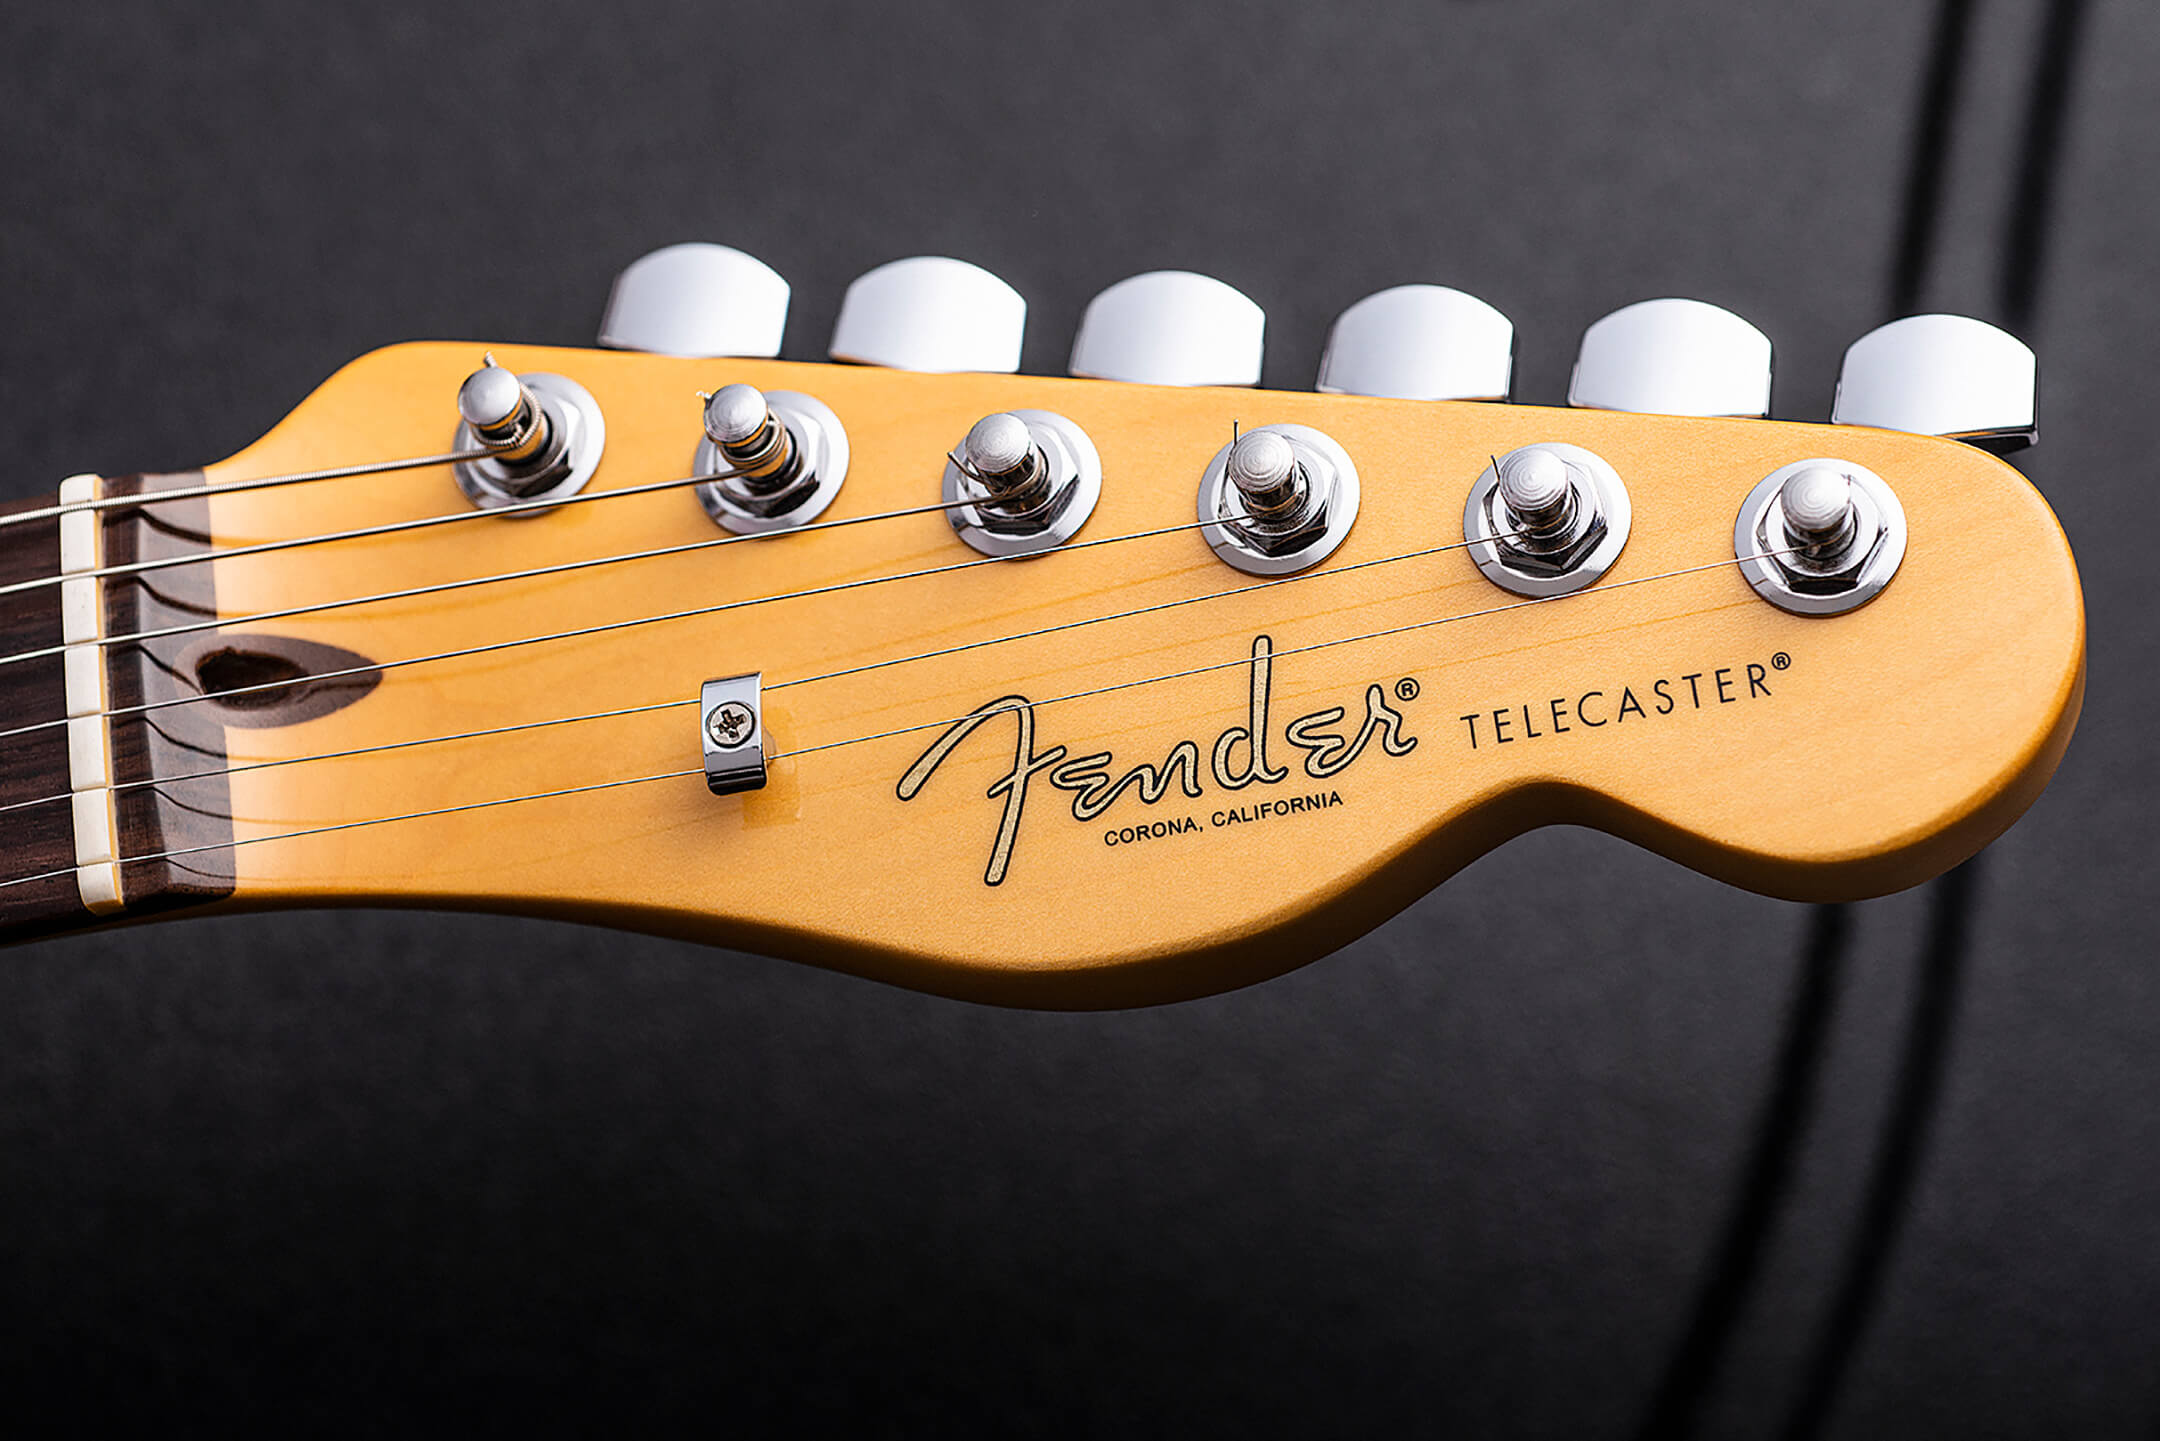 Fender American Professional II Telecaster